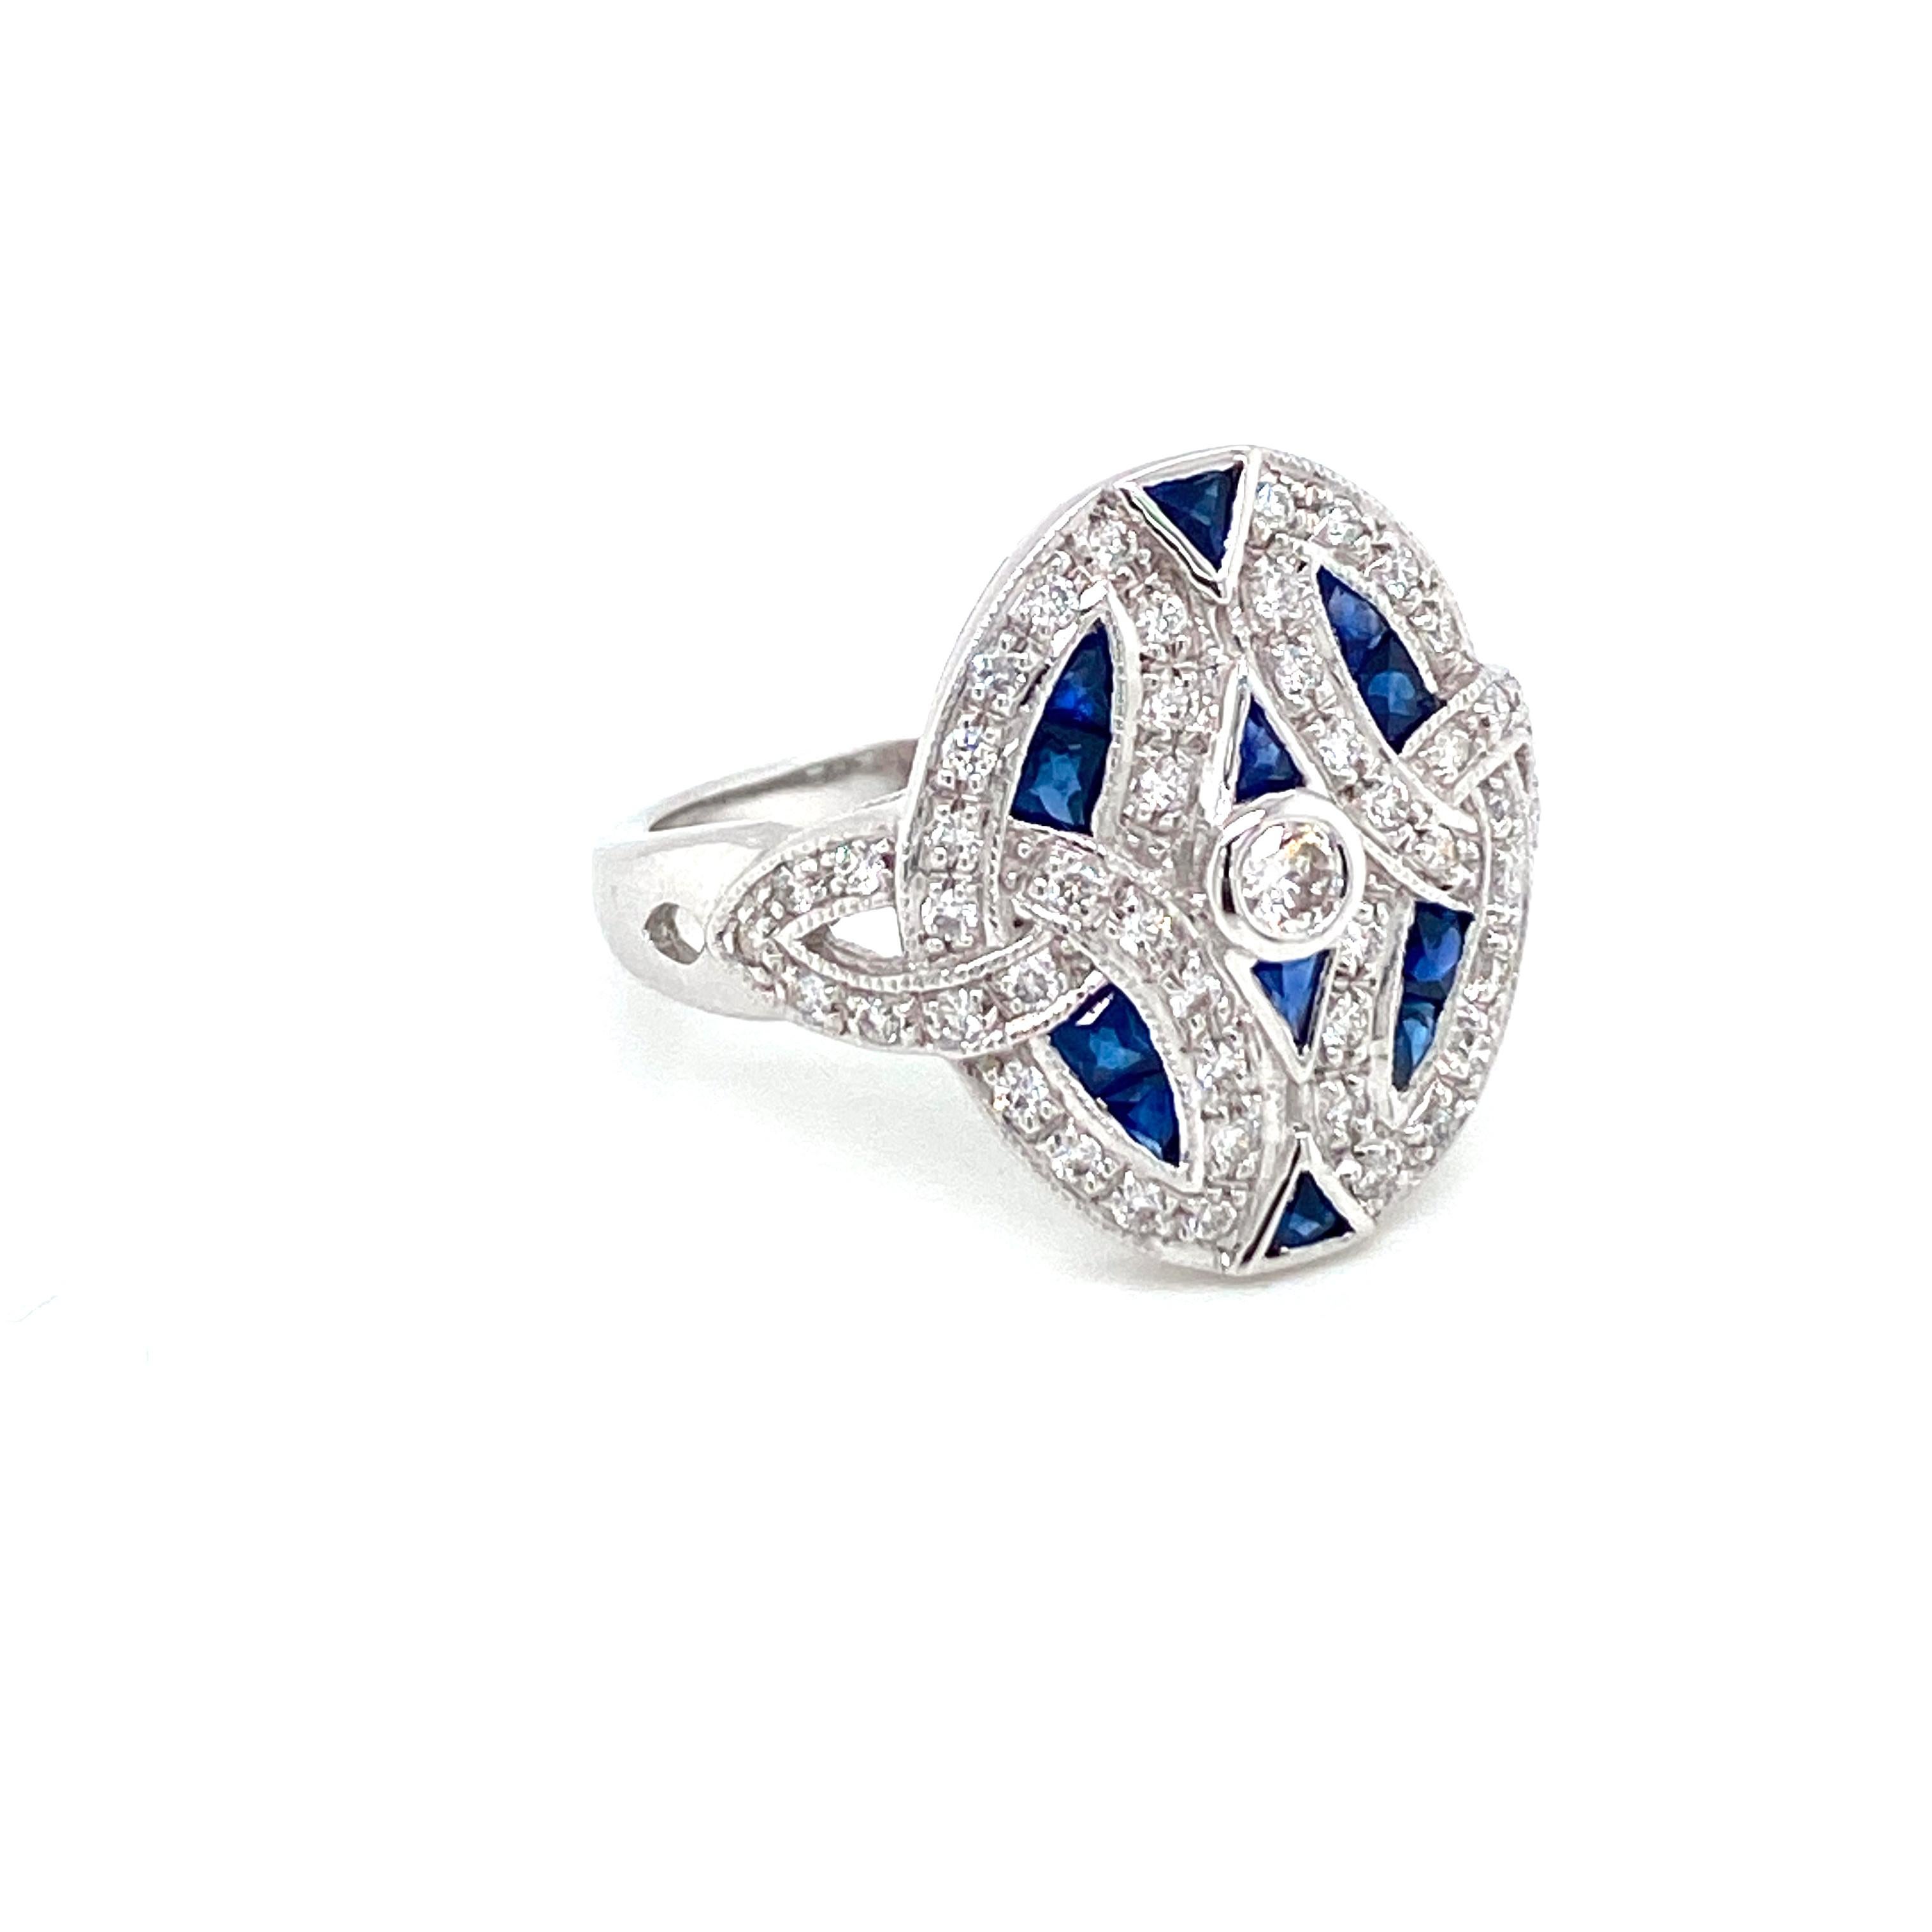 Mixed Cut Art Deco Style Diamond Sapphire Cocktail Ring Estate Fine Jewelry